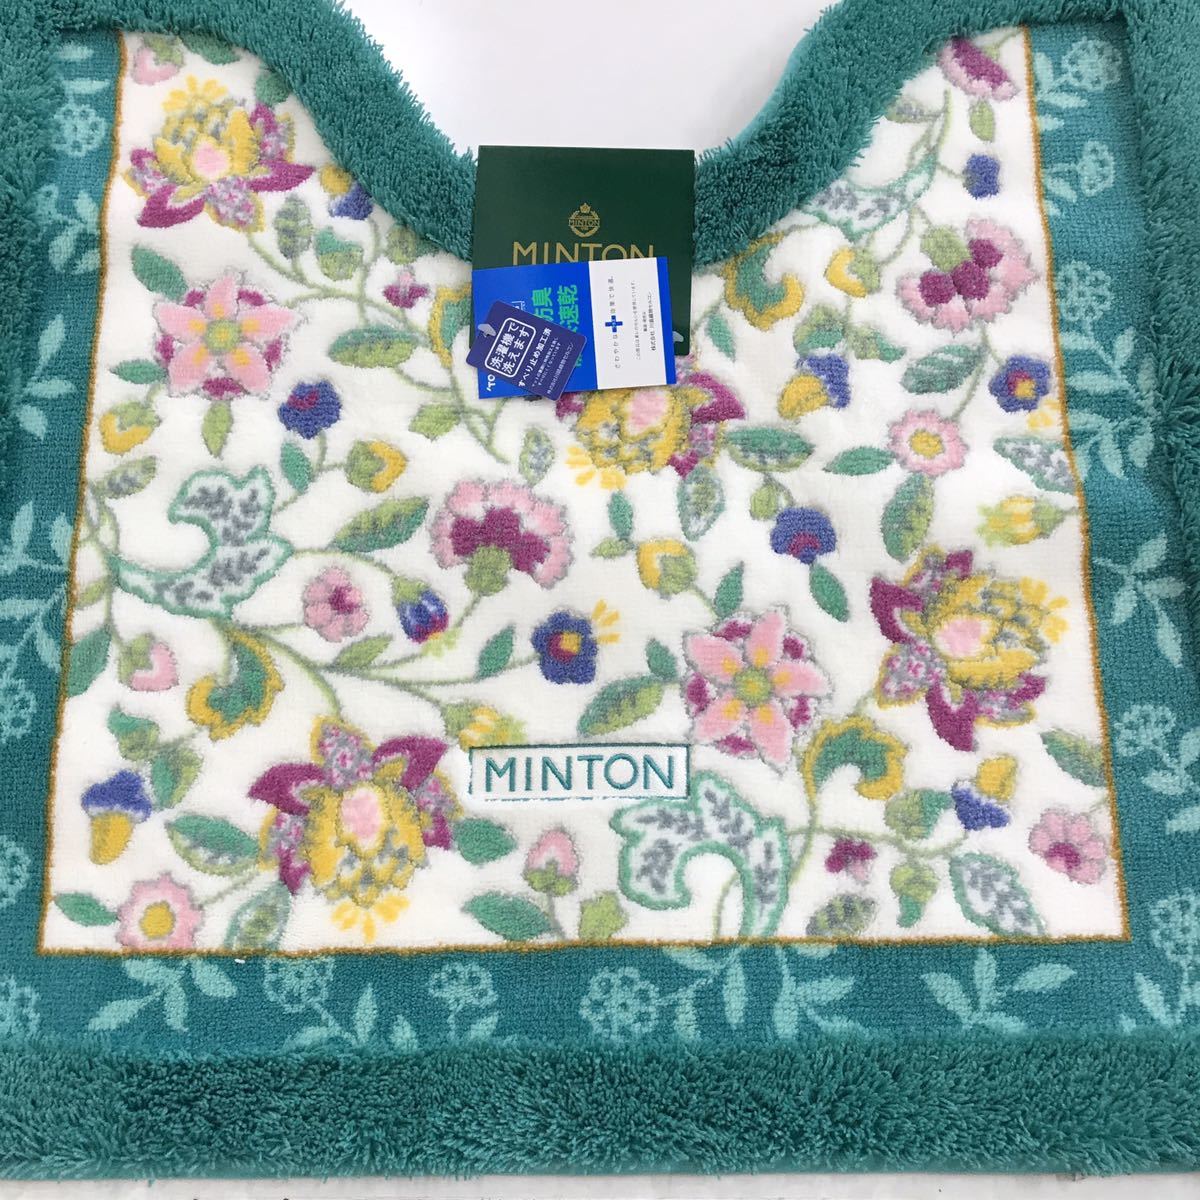  new goods Minton toilet mat slip prevention attaching 60×65V( green ) made in Japan letter pack post service plus 520 jpy 